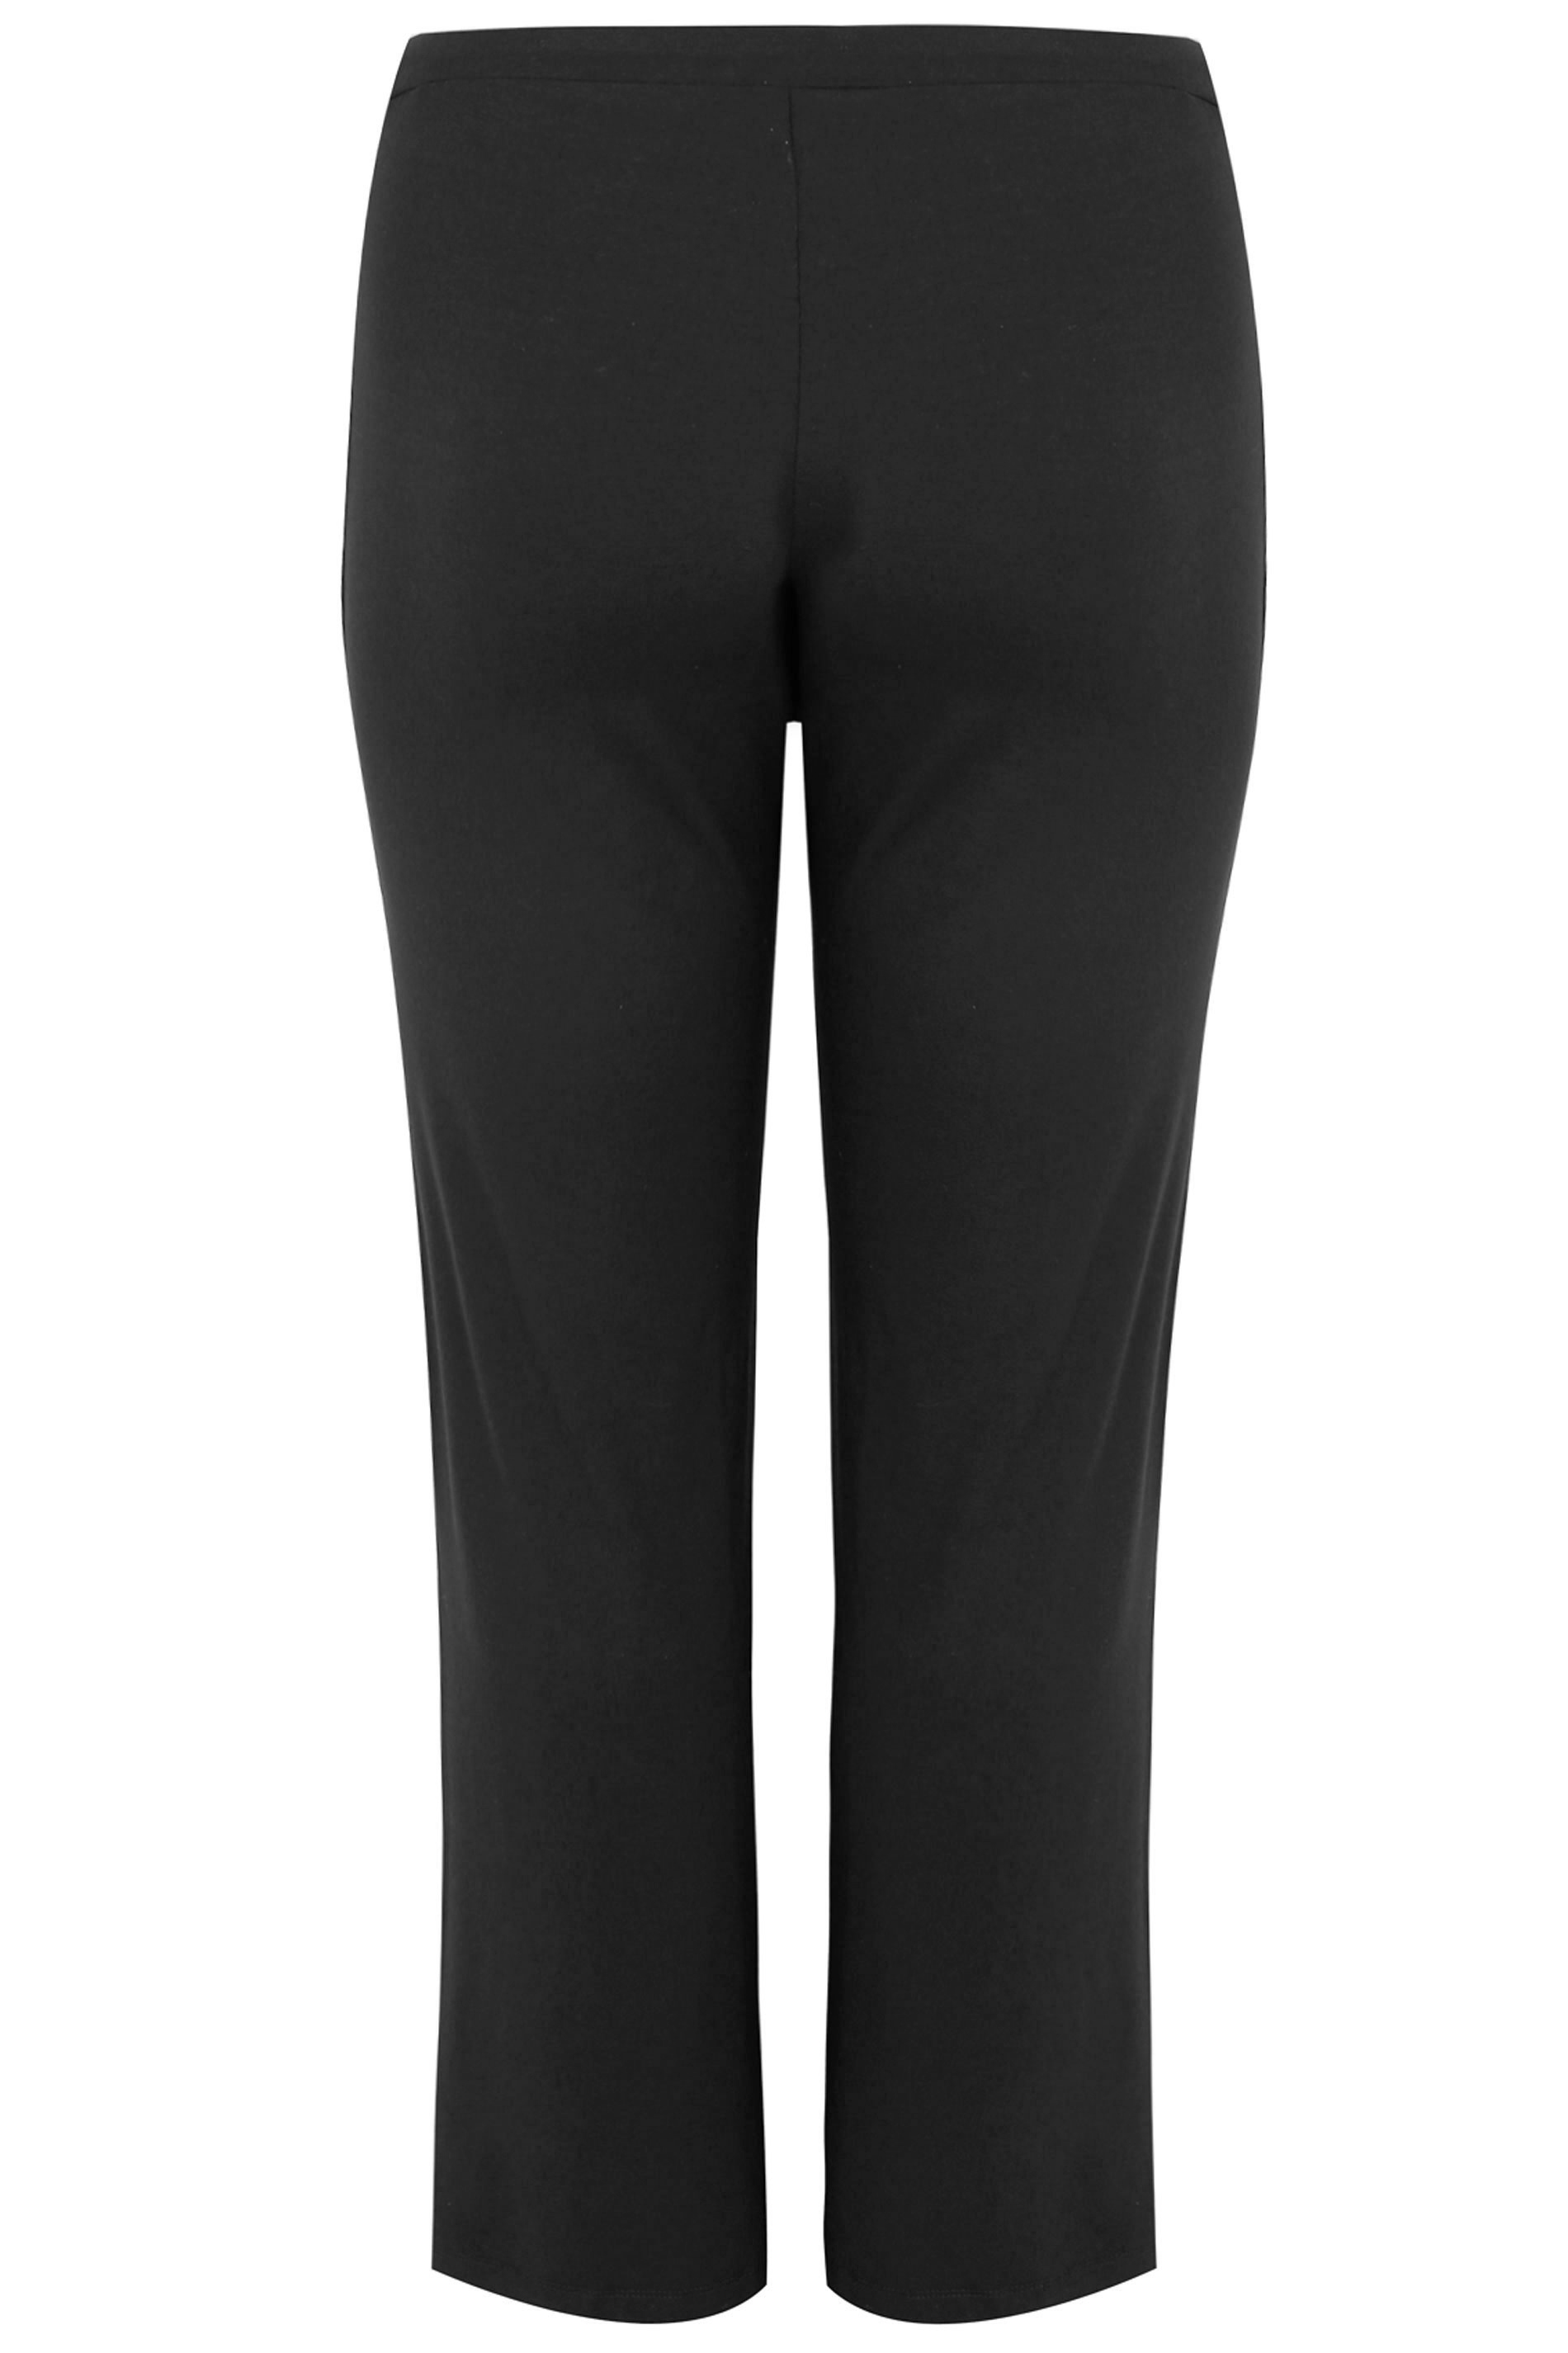 Kiabi slacks MEN FASHION Trousers Basic Gray 38                  EU discount 92% 